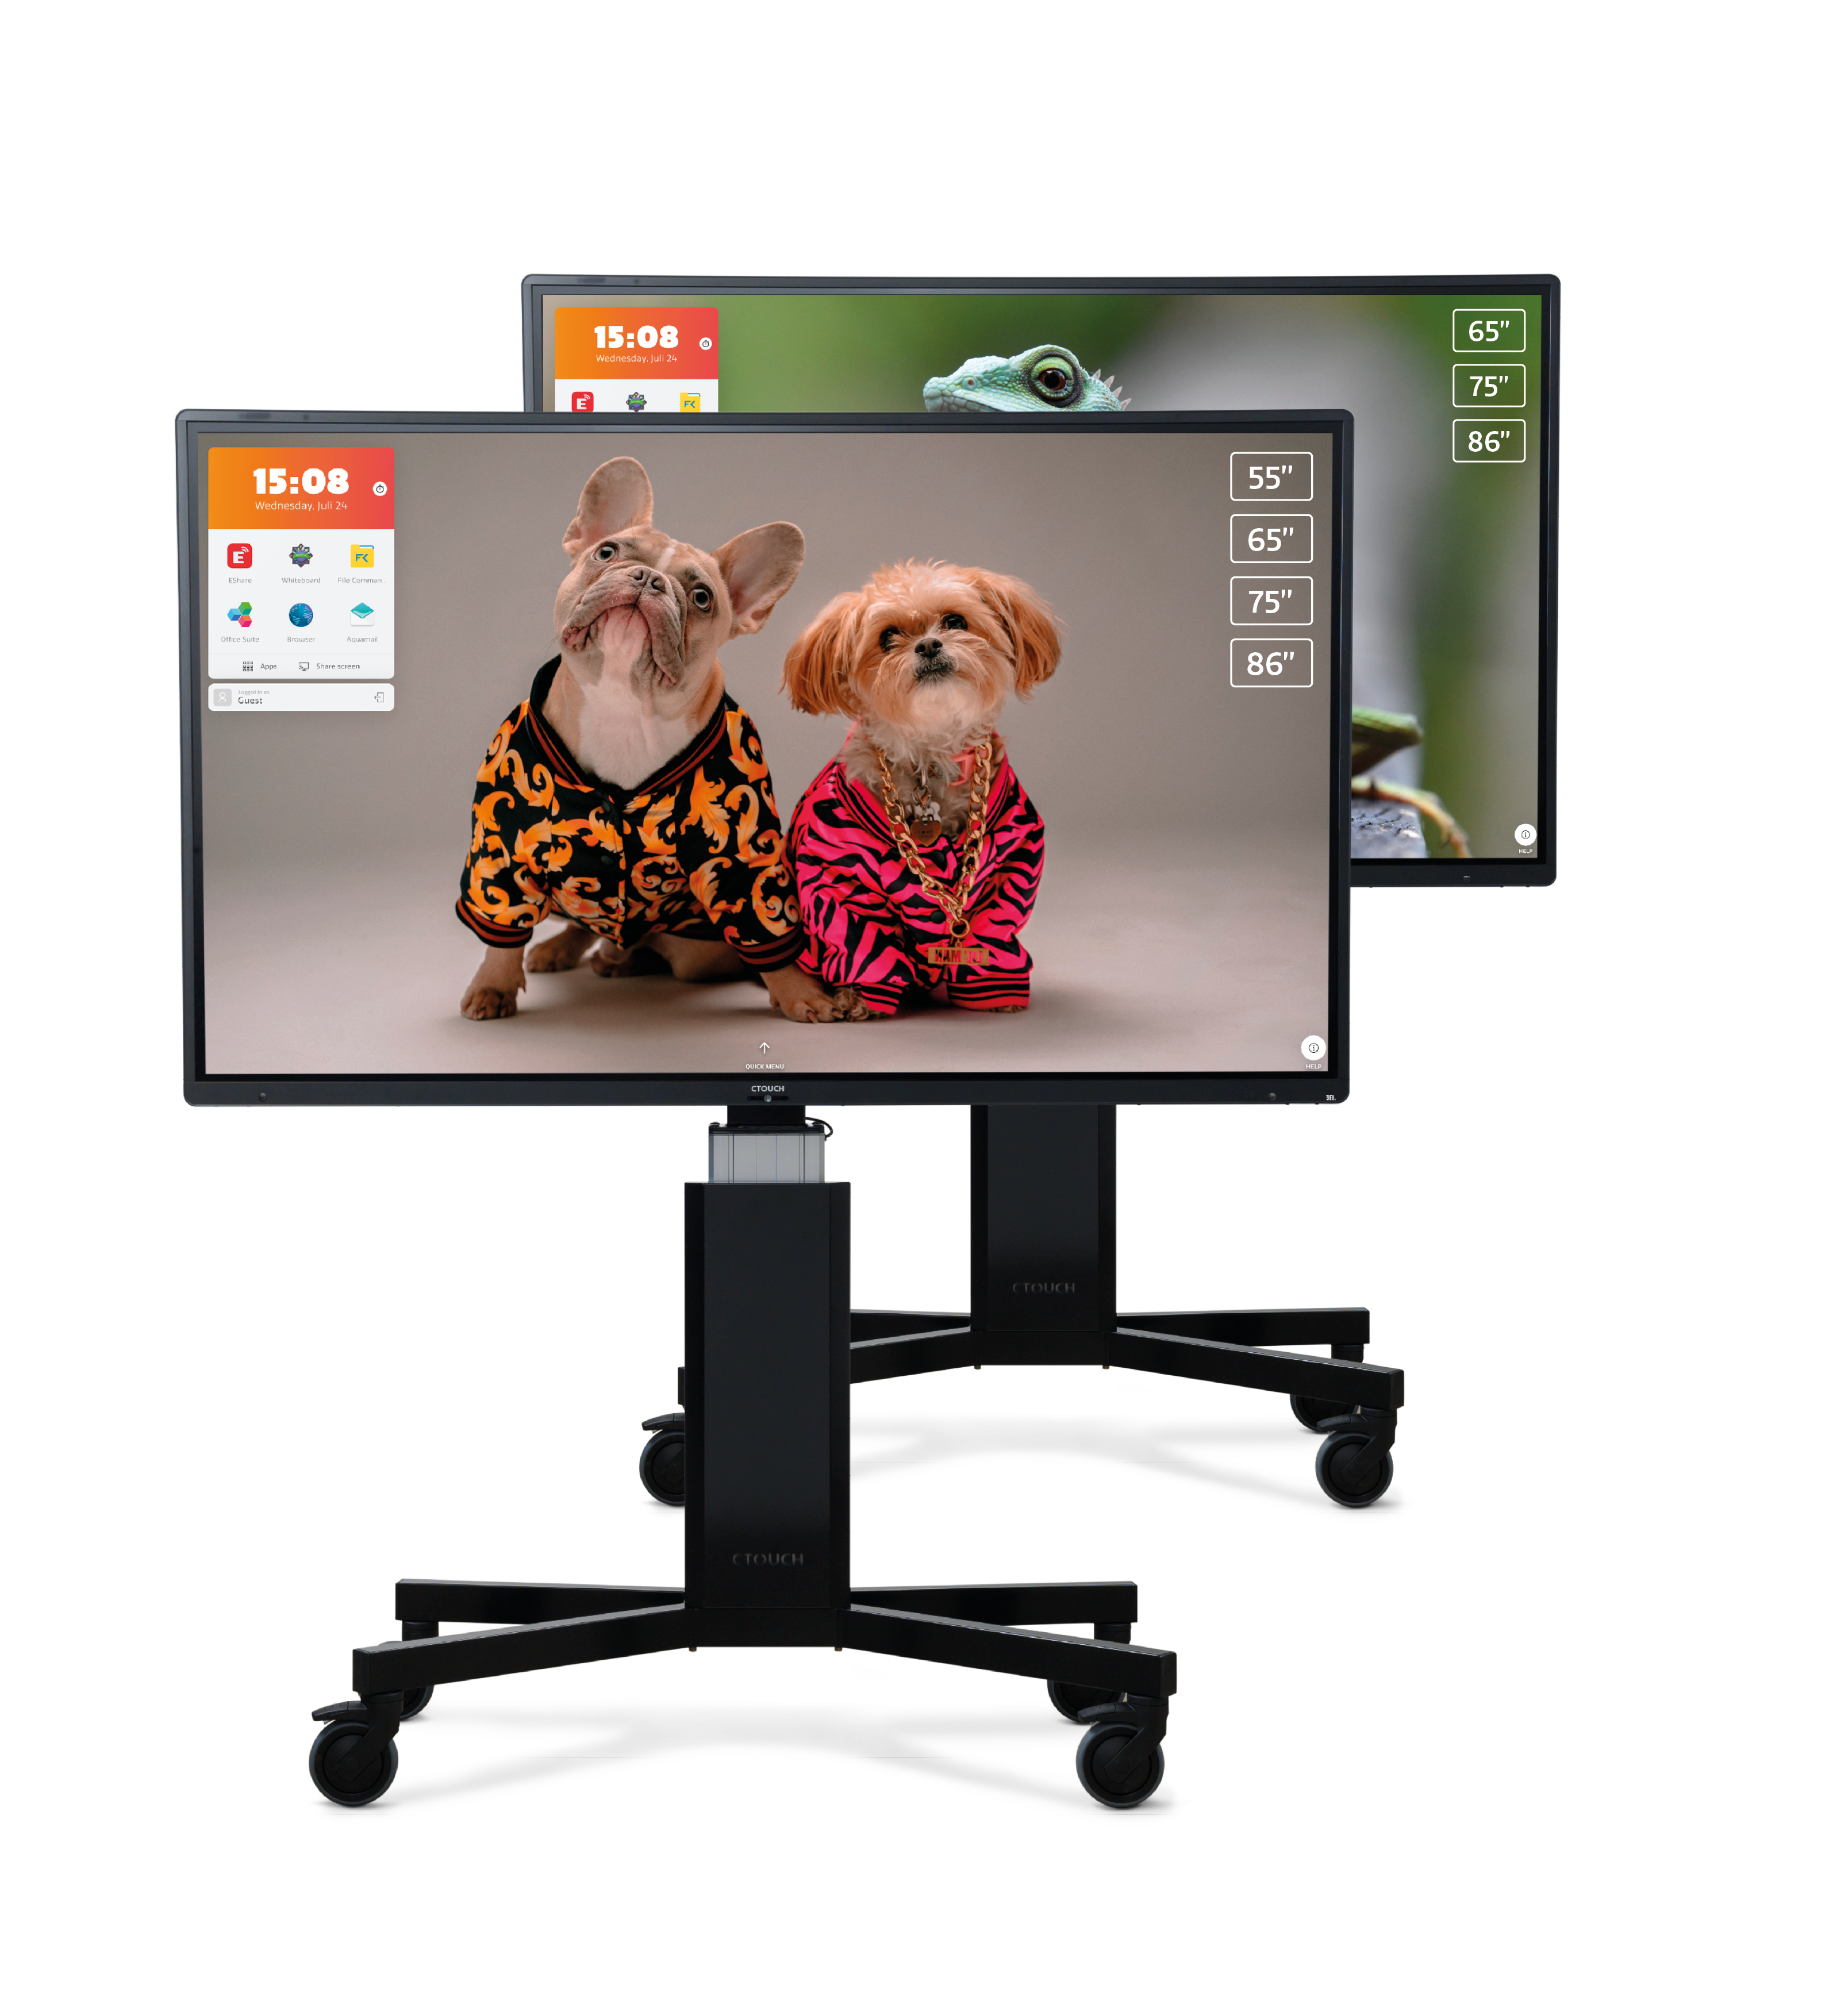 CTOUCH Riva 2 D2 R2 touchscreen digibord smartboard kopen offerte prijs